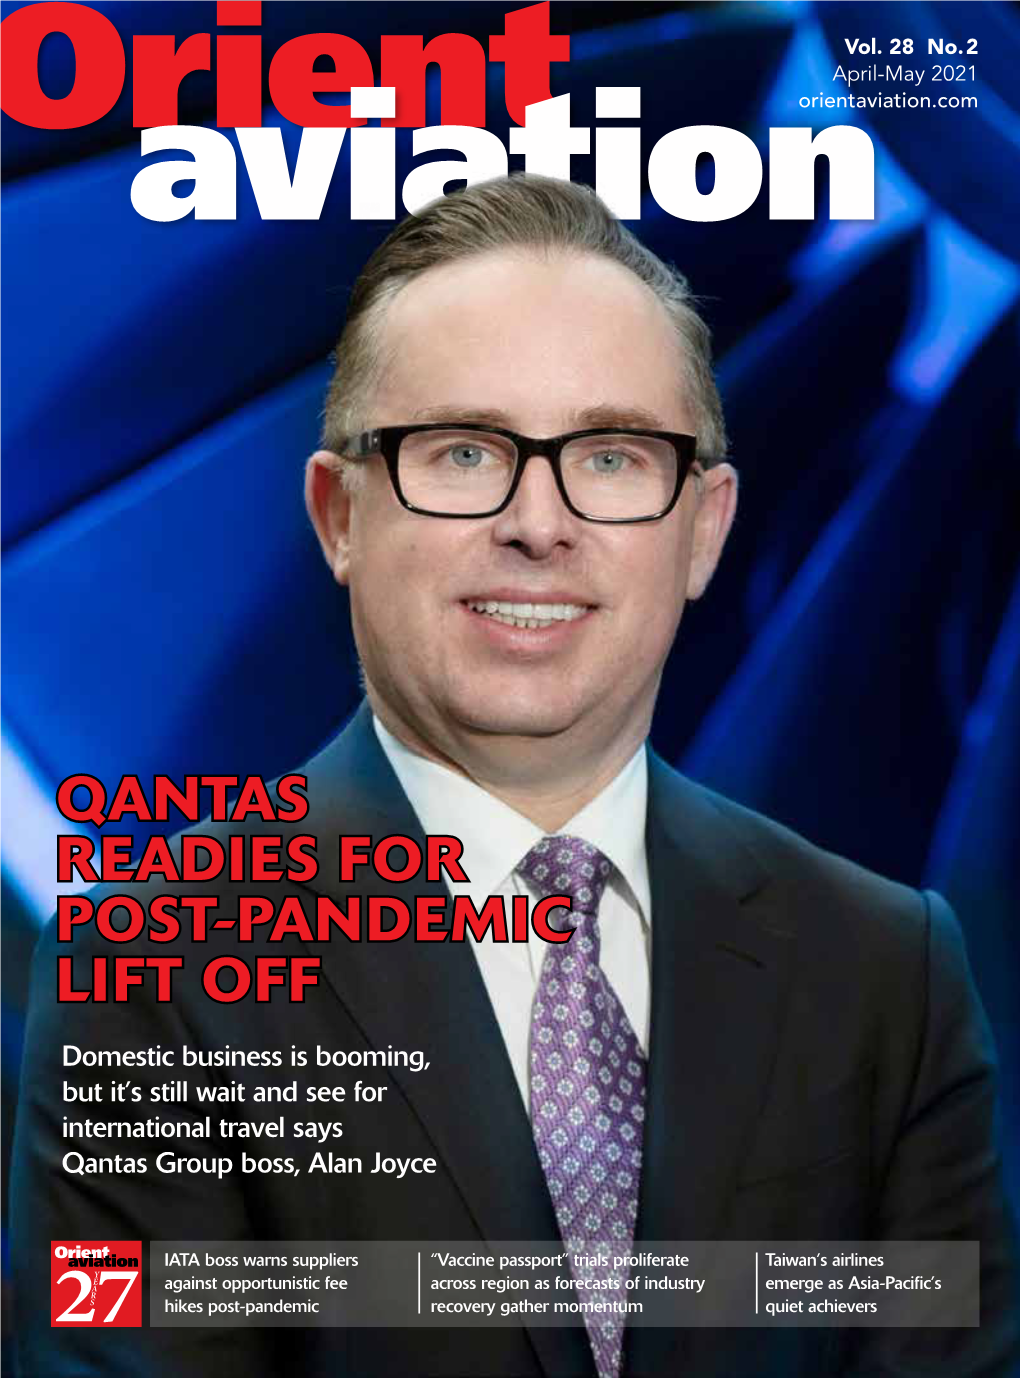 Qantas Readies for Post-Pandemic Lift Off